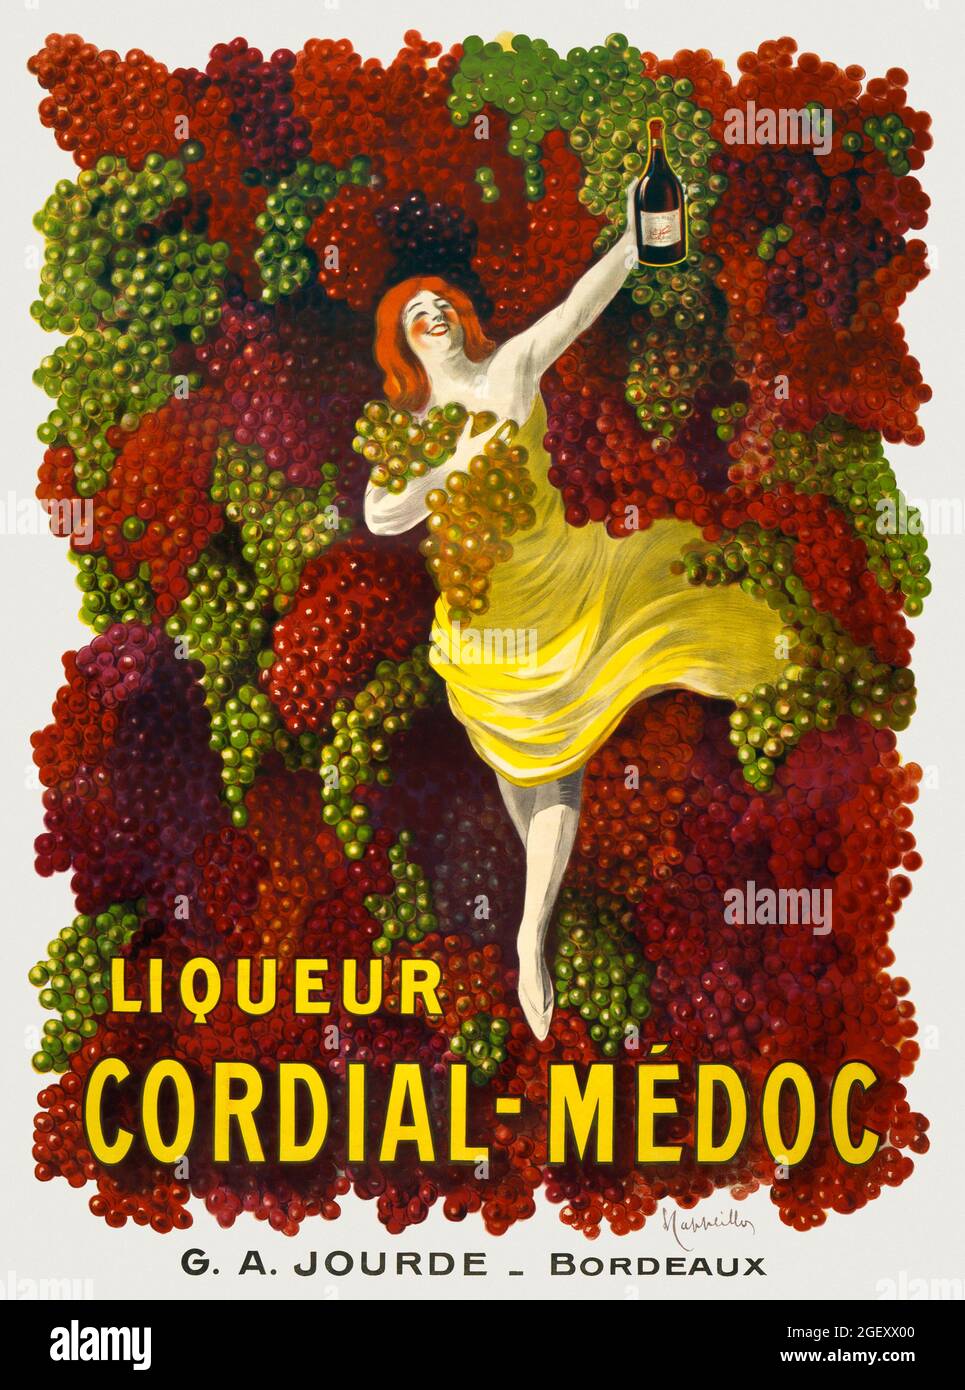 Liquer Cordial-Médoc, G. A. Jourde - Bordeaux (1907) Druck in hoher Auflösung von Leonetto Cappiello. Jugendstil. Stockfoto